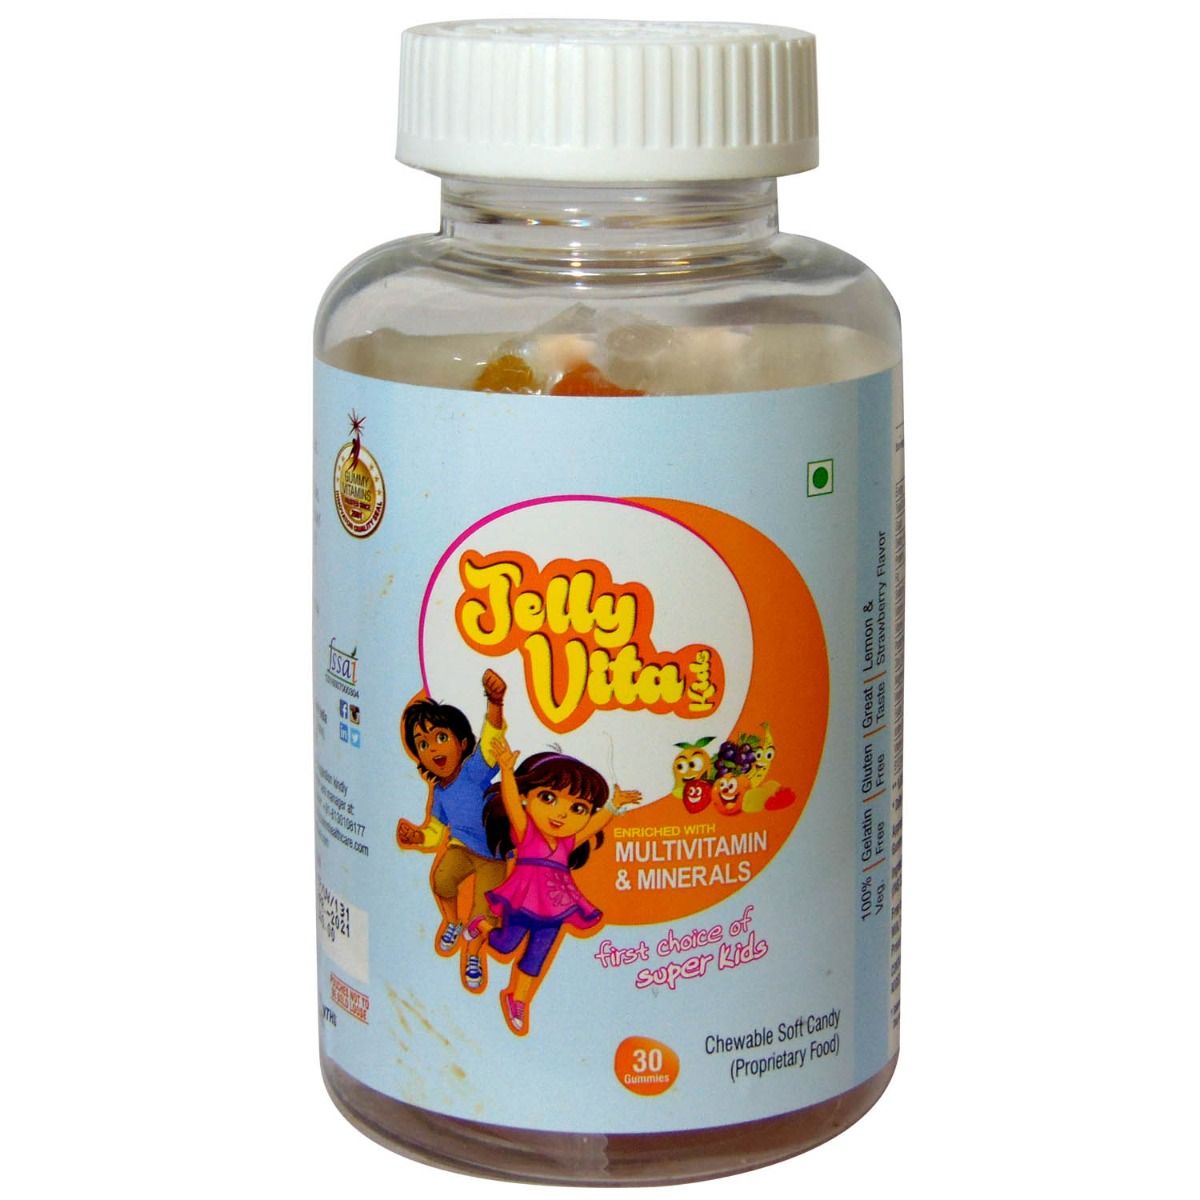 Jelly Vita Kids Multivitamin & Minerals Gummies, 30 Count, Pack of 1 